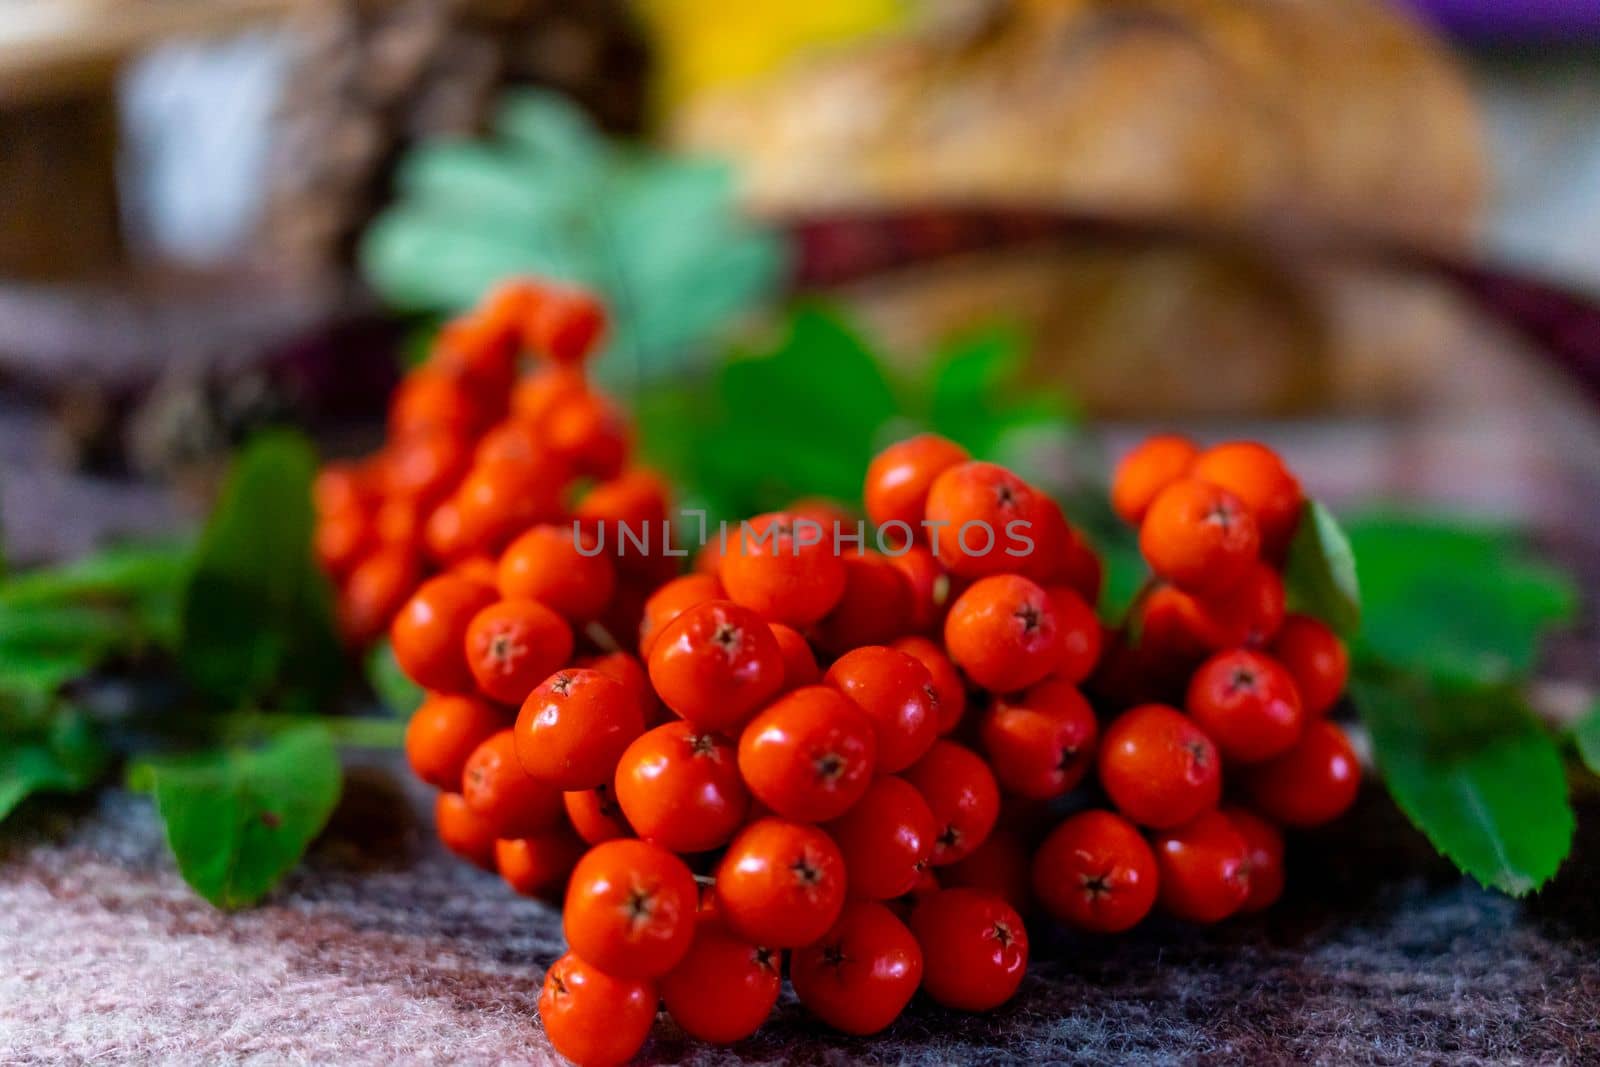 A bunch of red rowanberries on a blurred background by Serhii_Voroshchuk